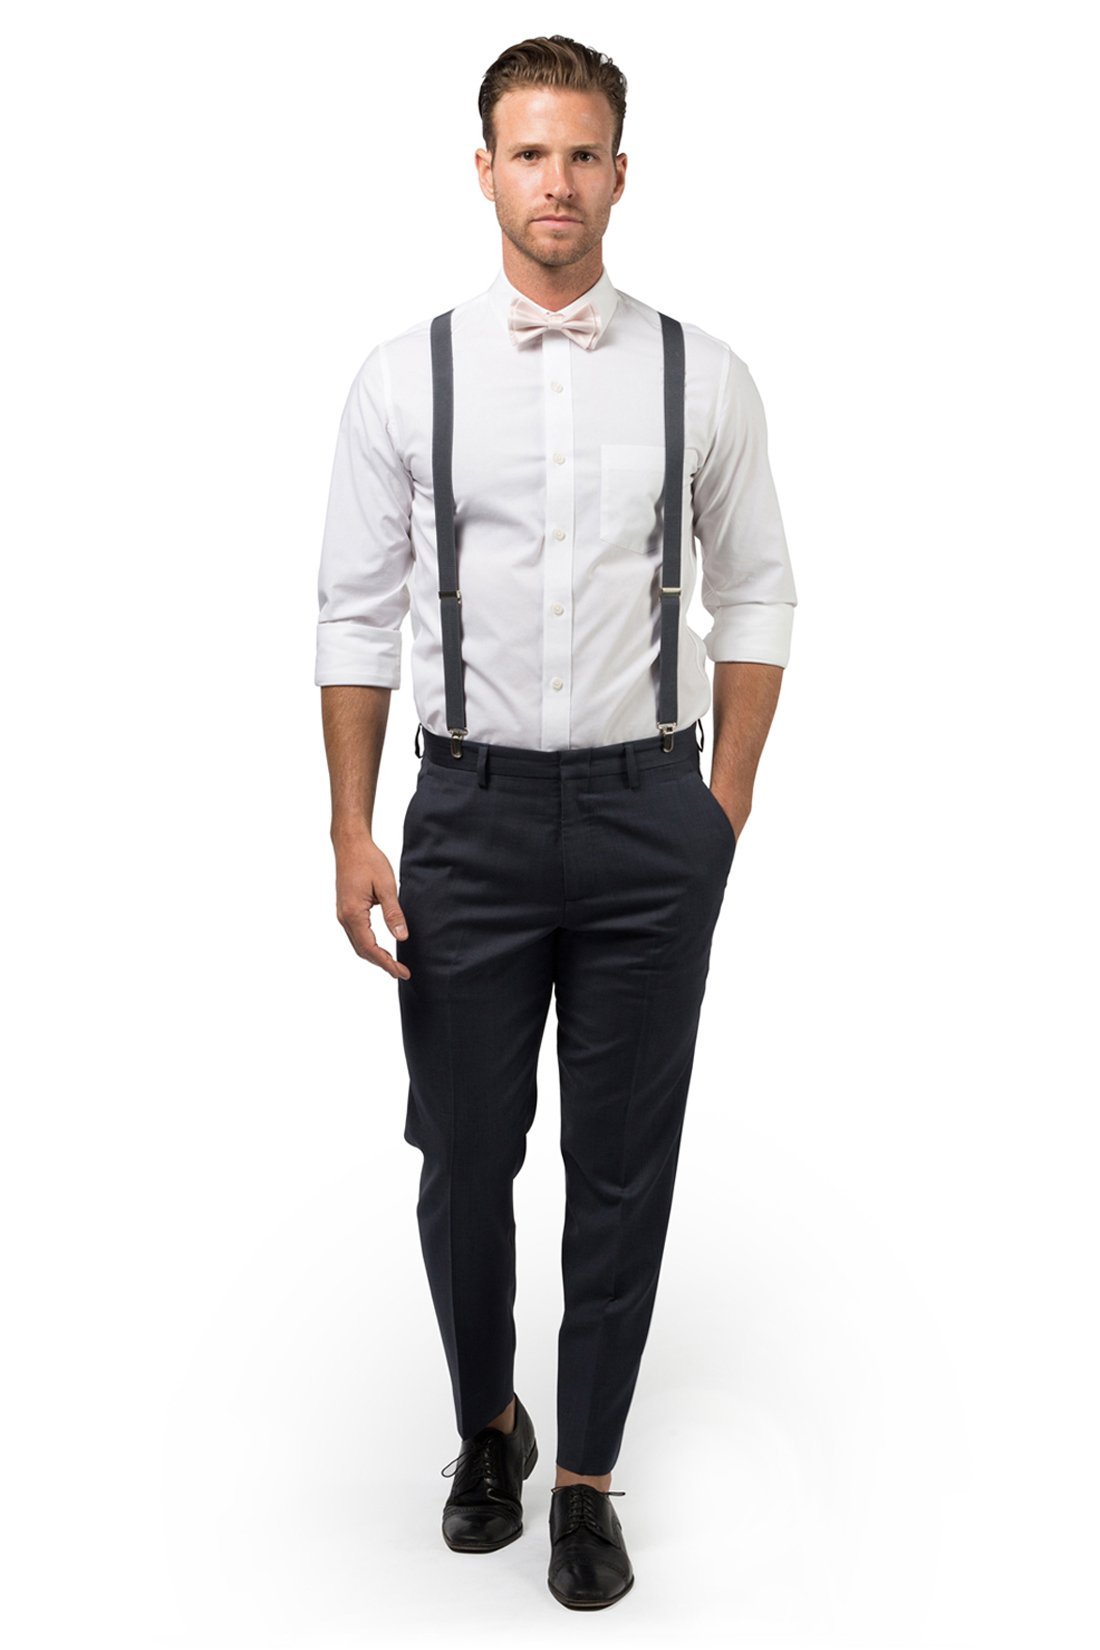 Charcoal Grey Suspenders & Bow Ties